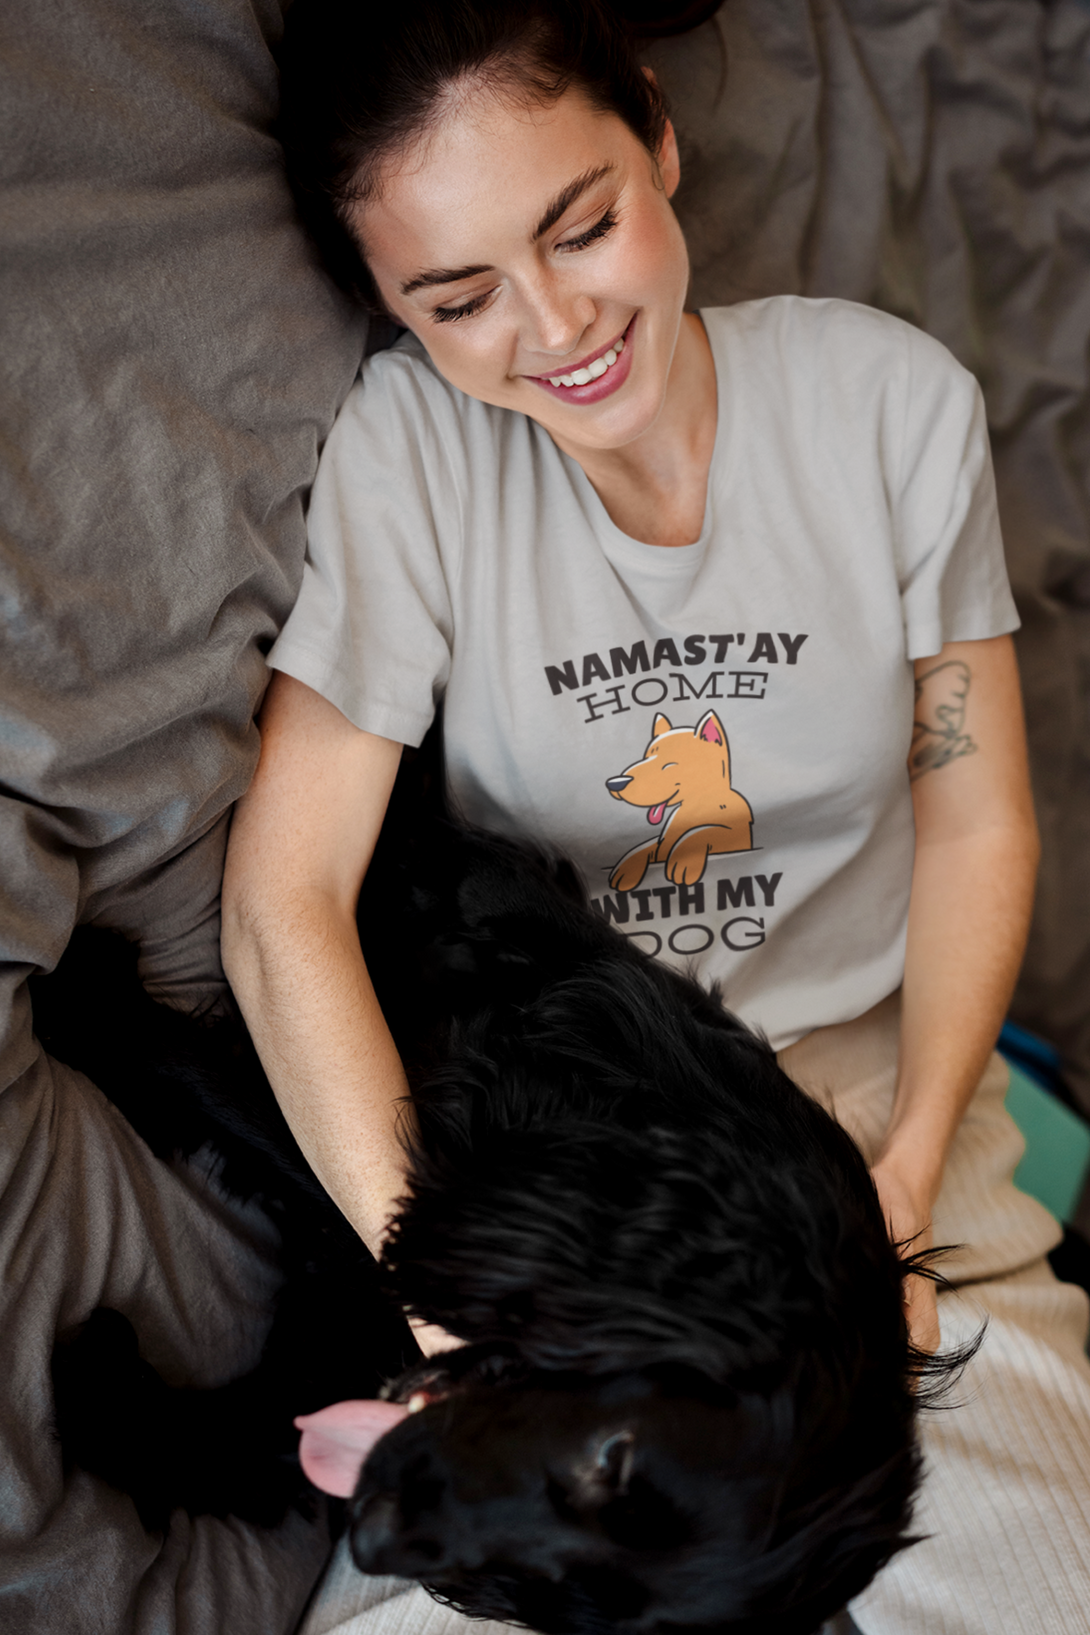 Namastay Home Dog Printed T-Shirt For Women - WowWaves - 5